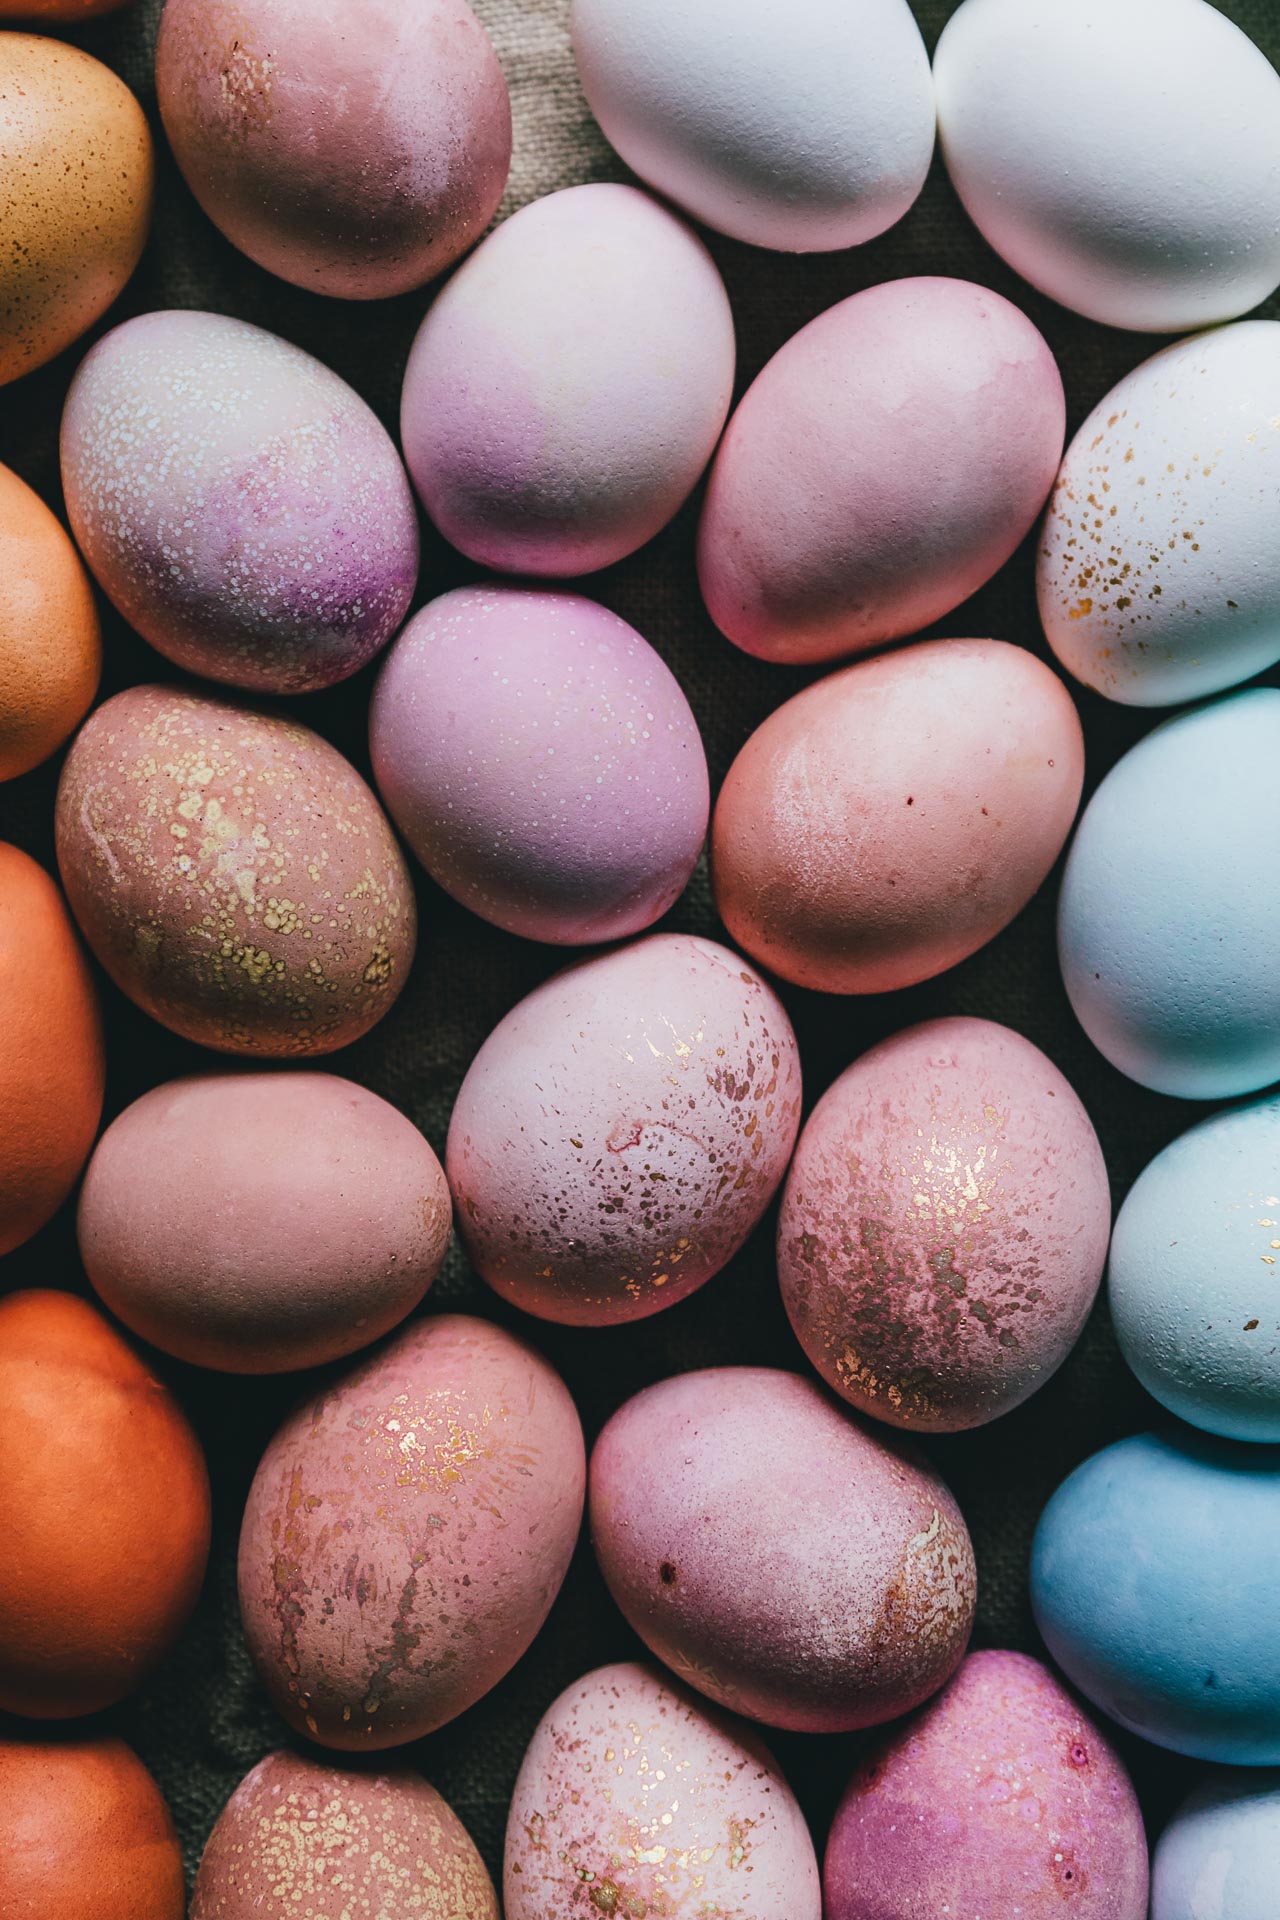 DIY Naturally Dyed Eggs | HonestlyYUM (honestlyyum.com)